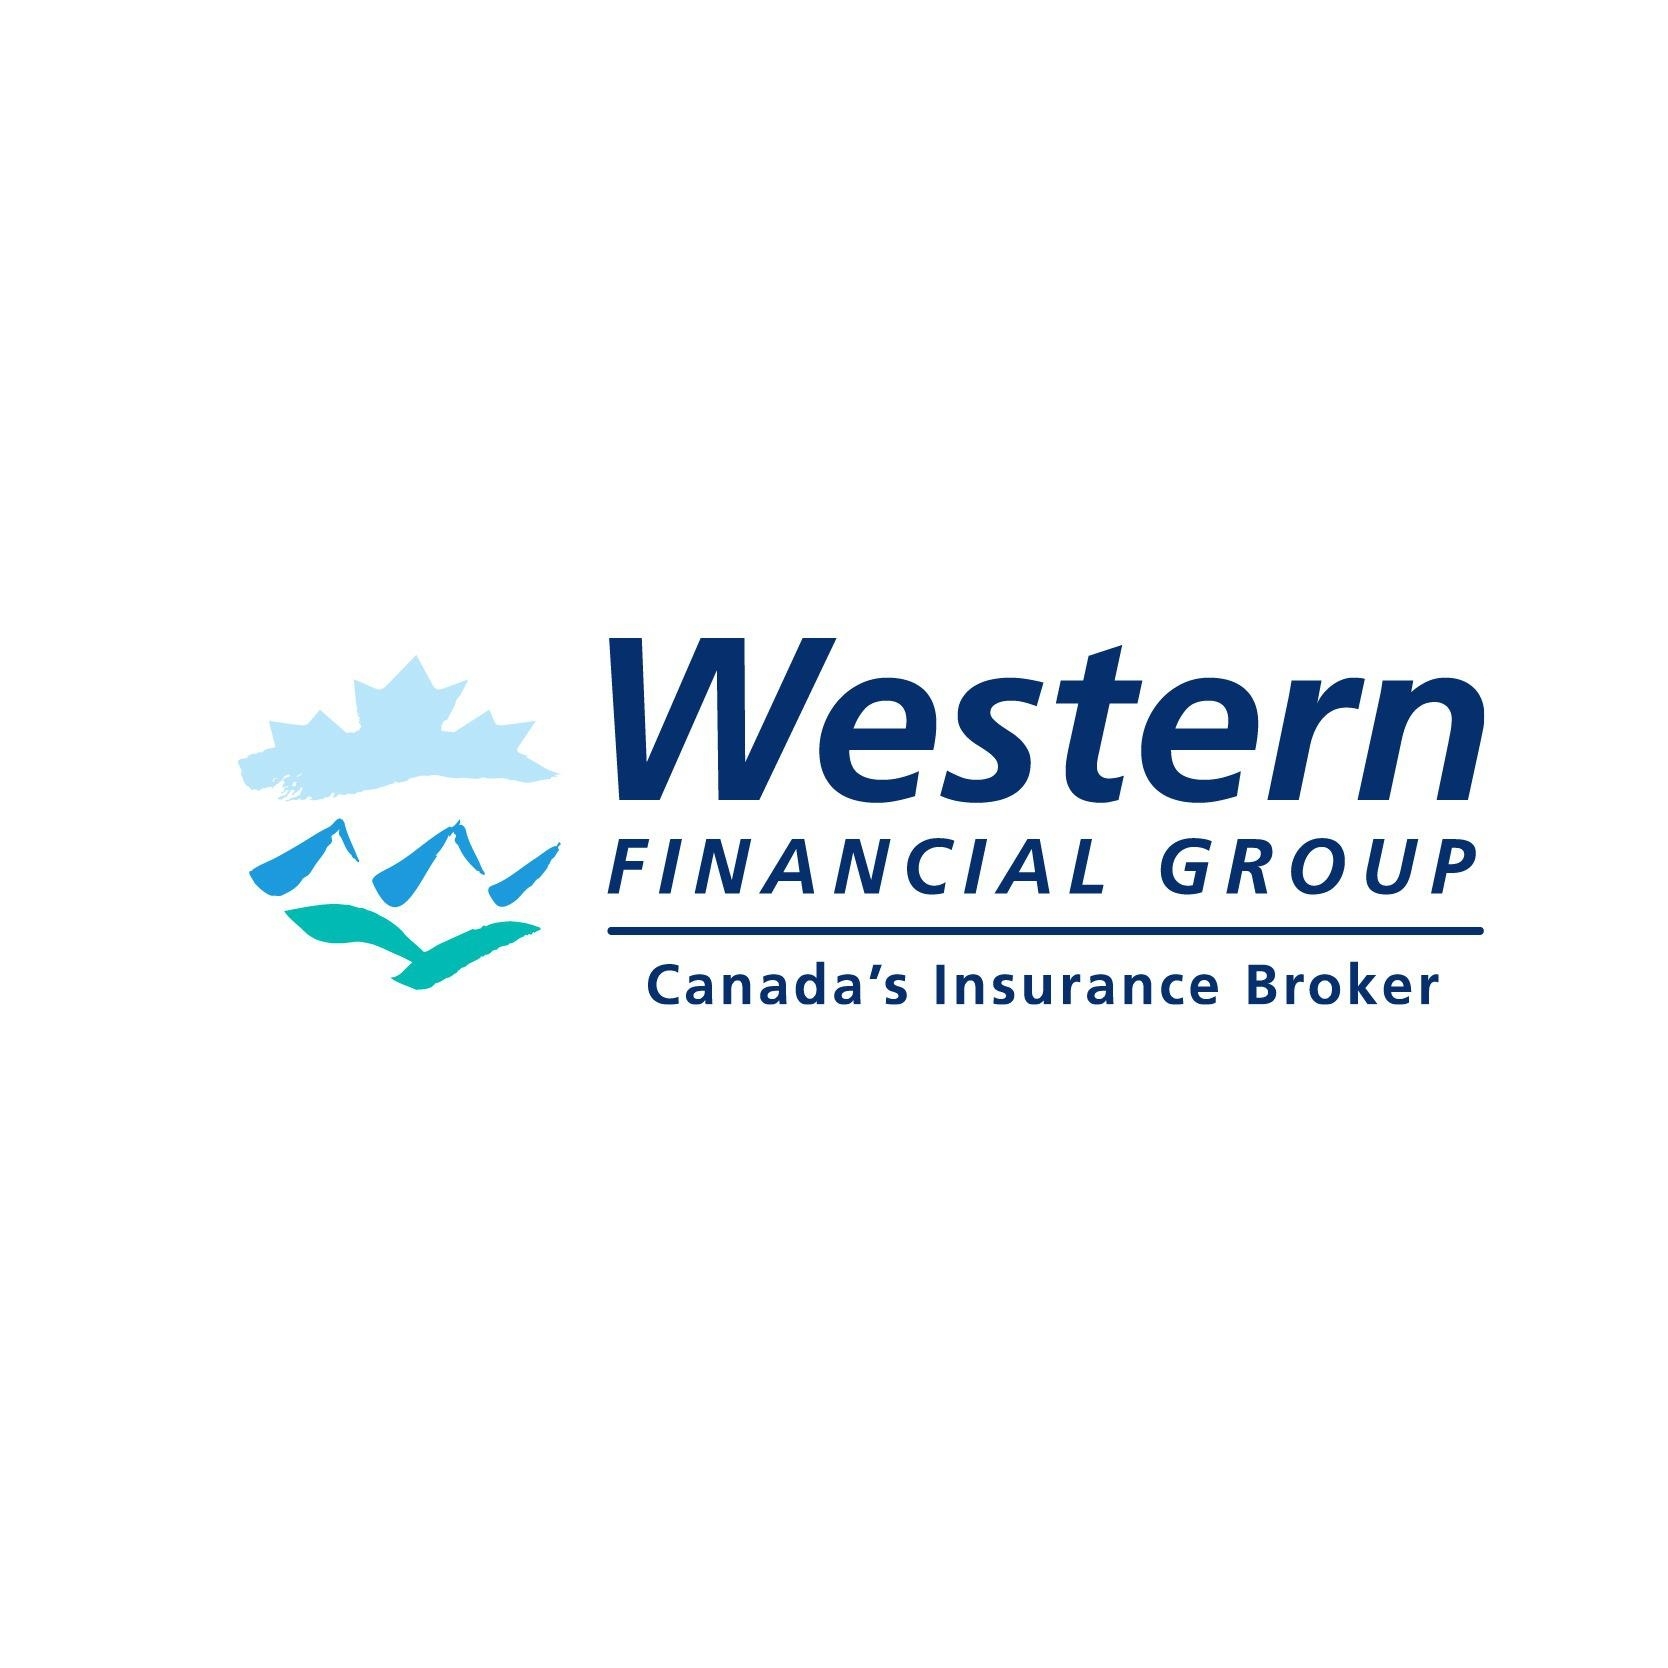 Western Financial Group Inc. - Canada's Insurance Broker - Agents d'assurance